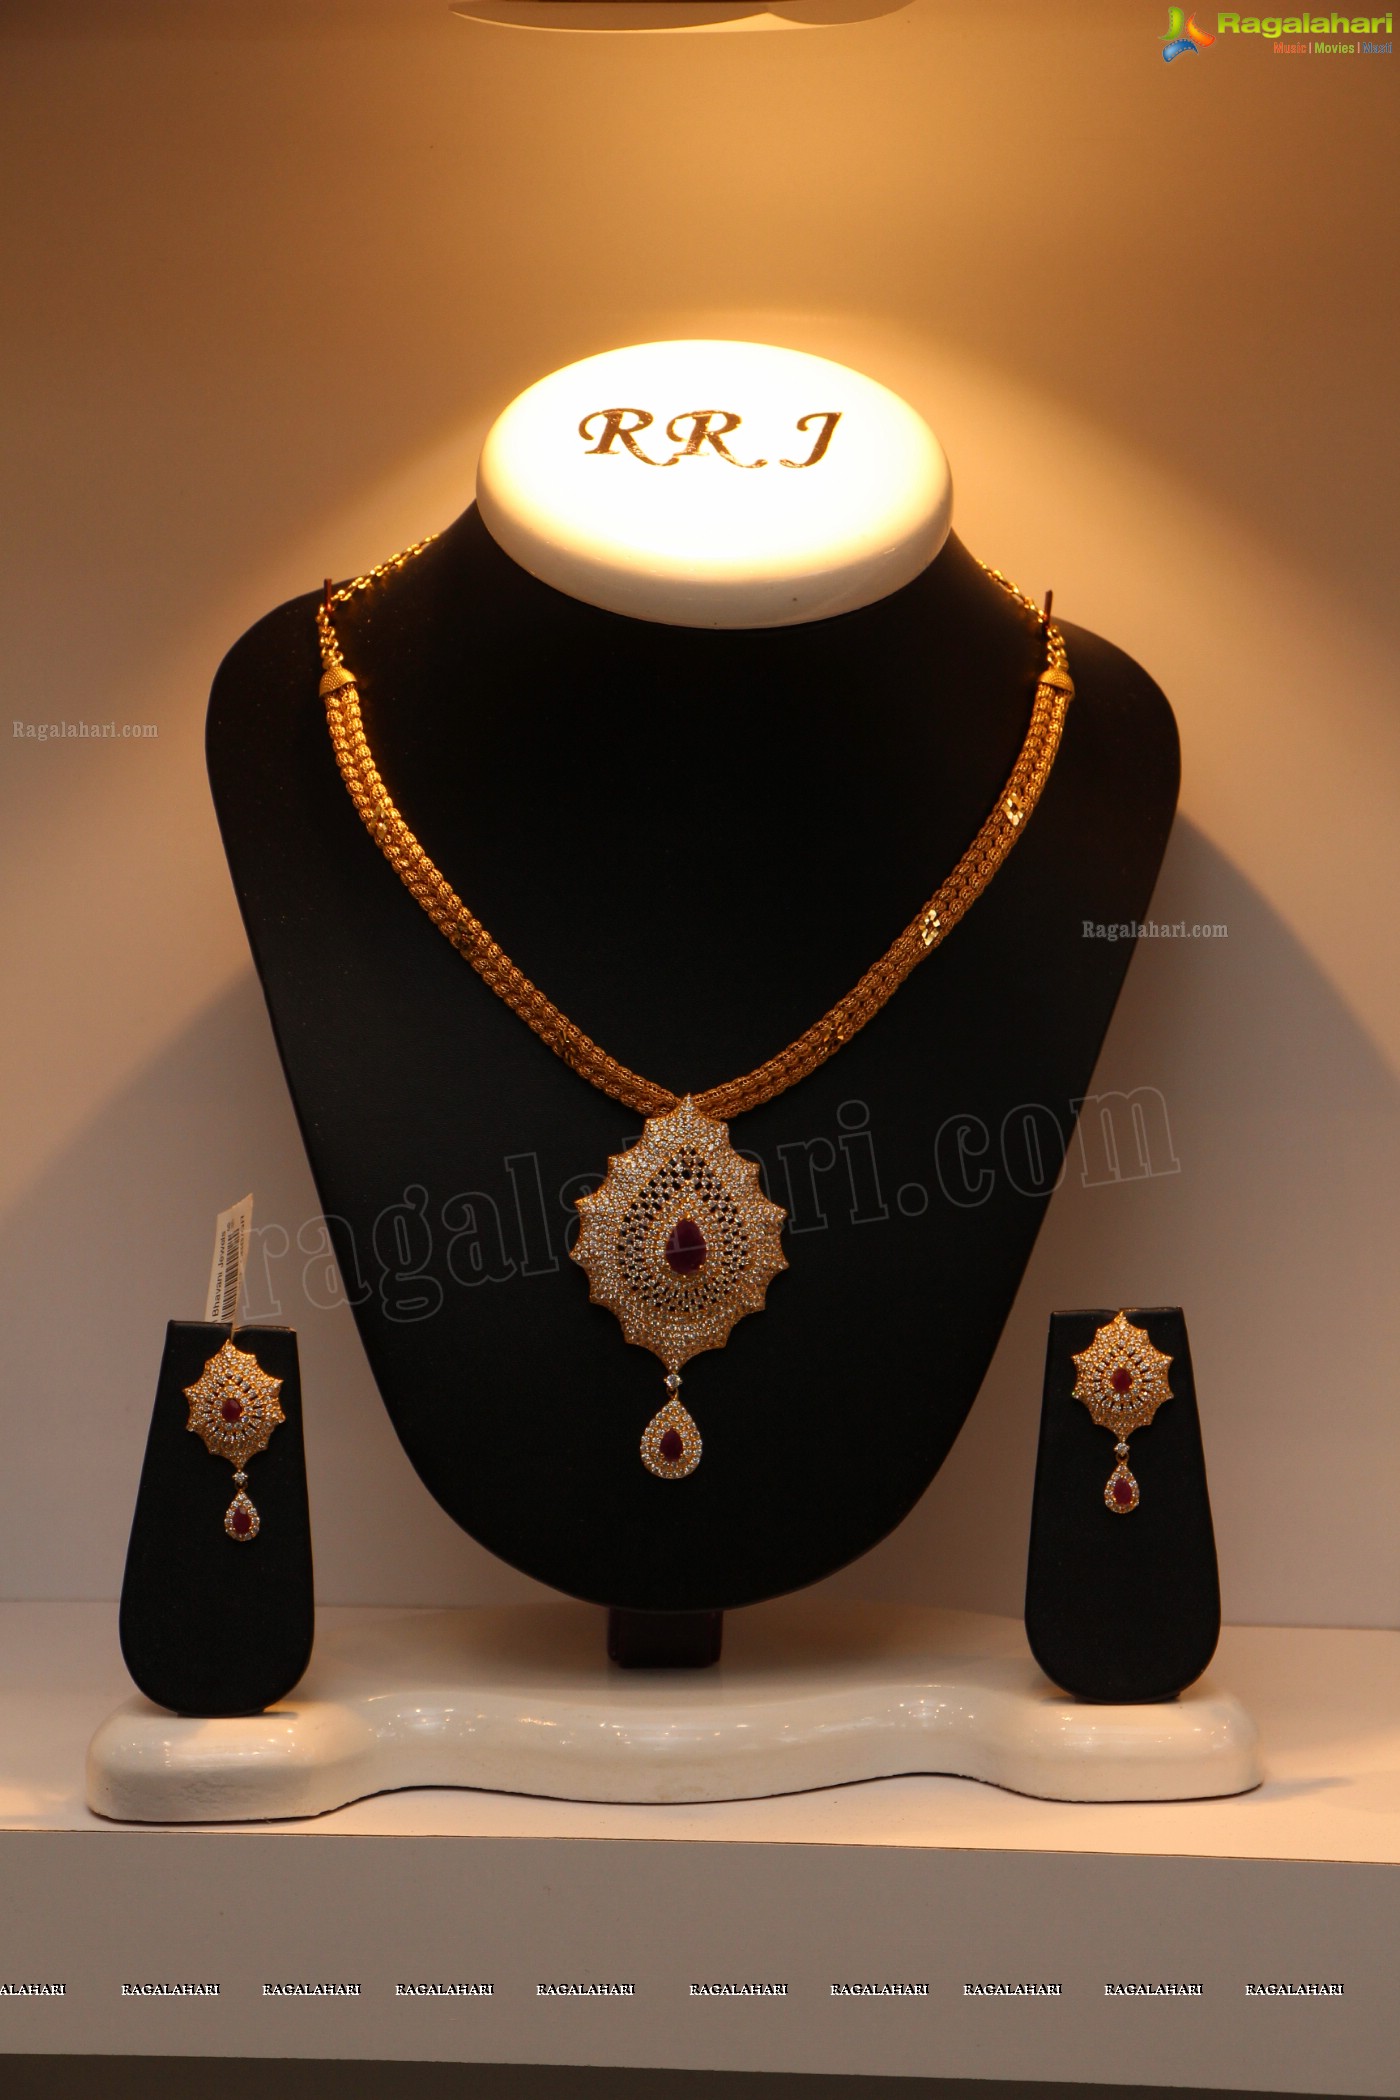 Radha Ghantasala's RR Jewellers Launch, Hyderabad